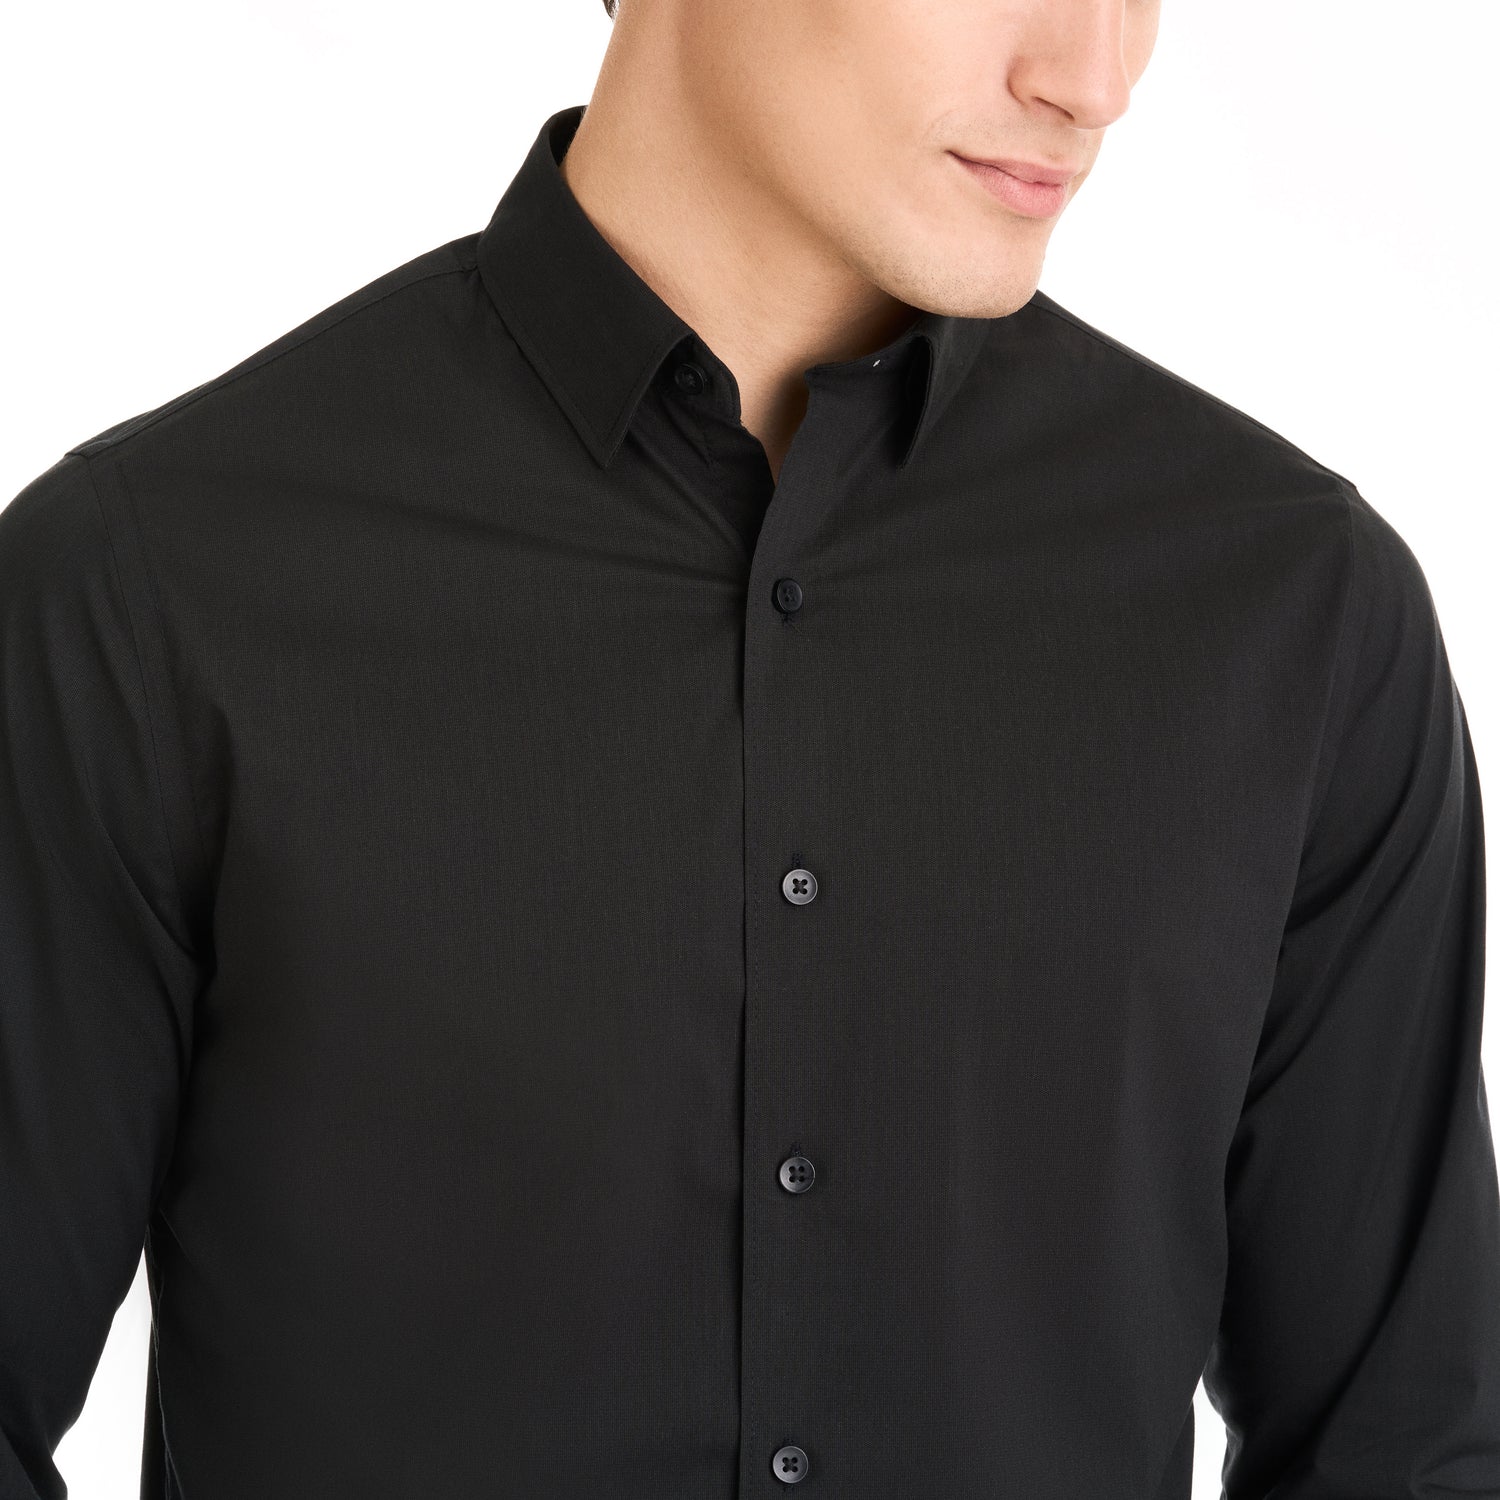 Cronbie Long Sleeve Stain Shield Solid Shirt - Slim Fit